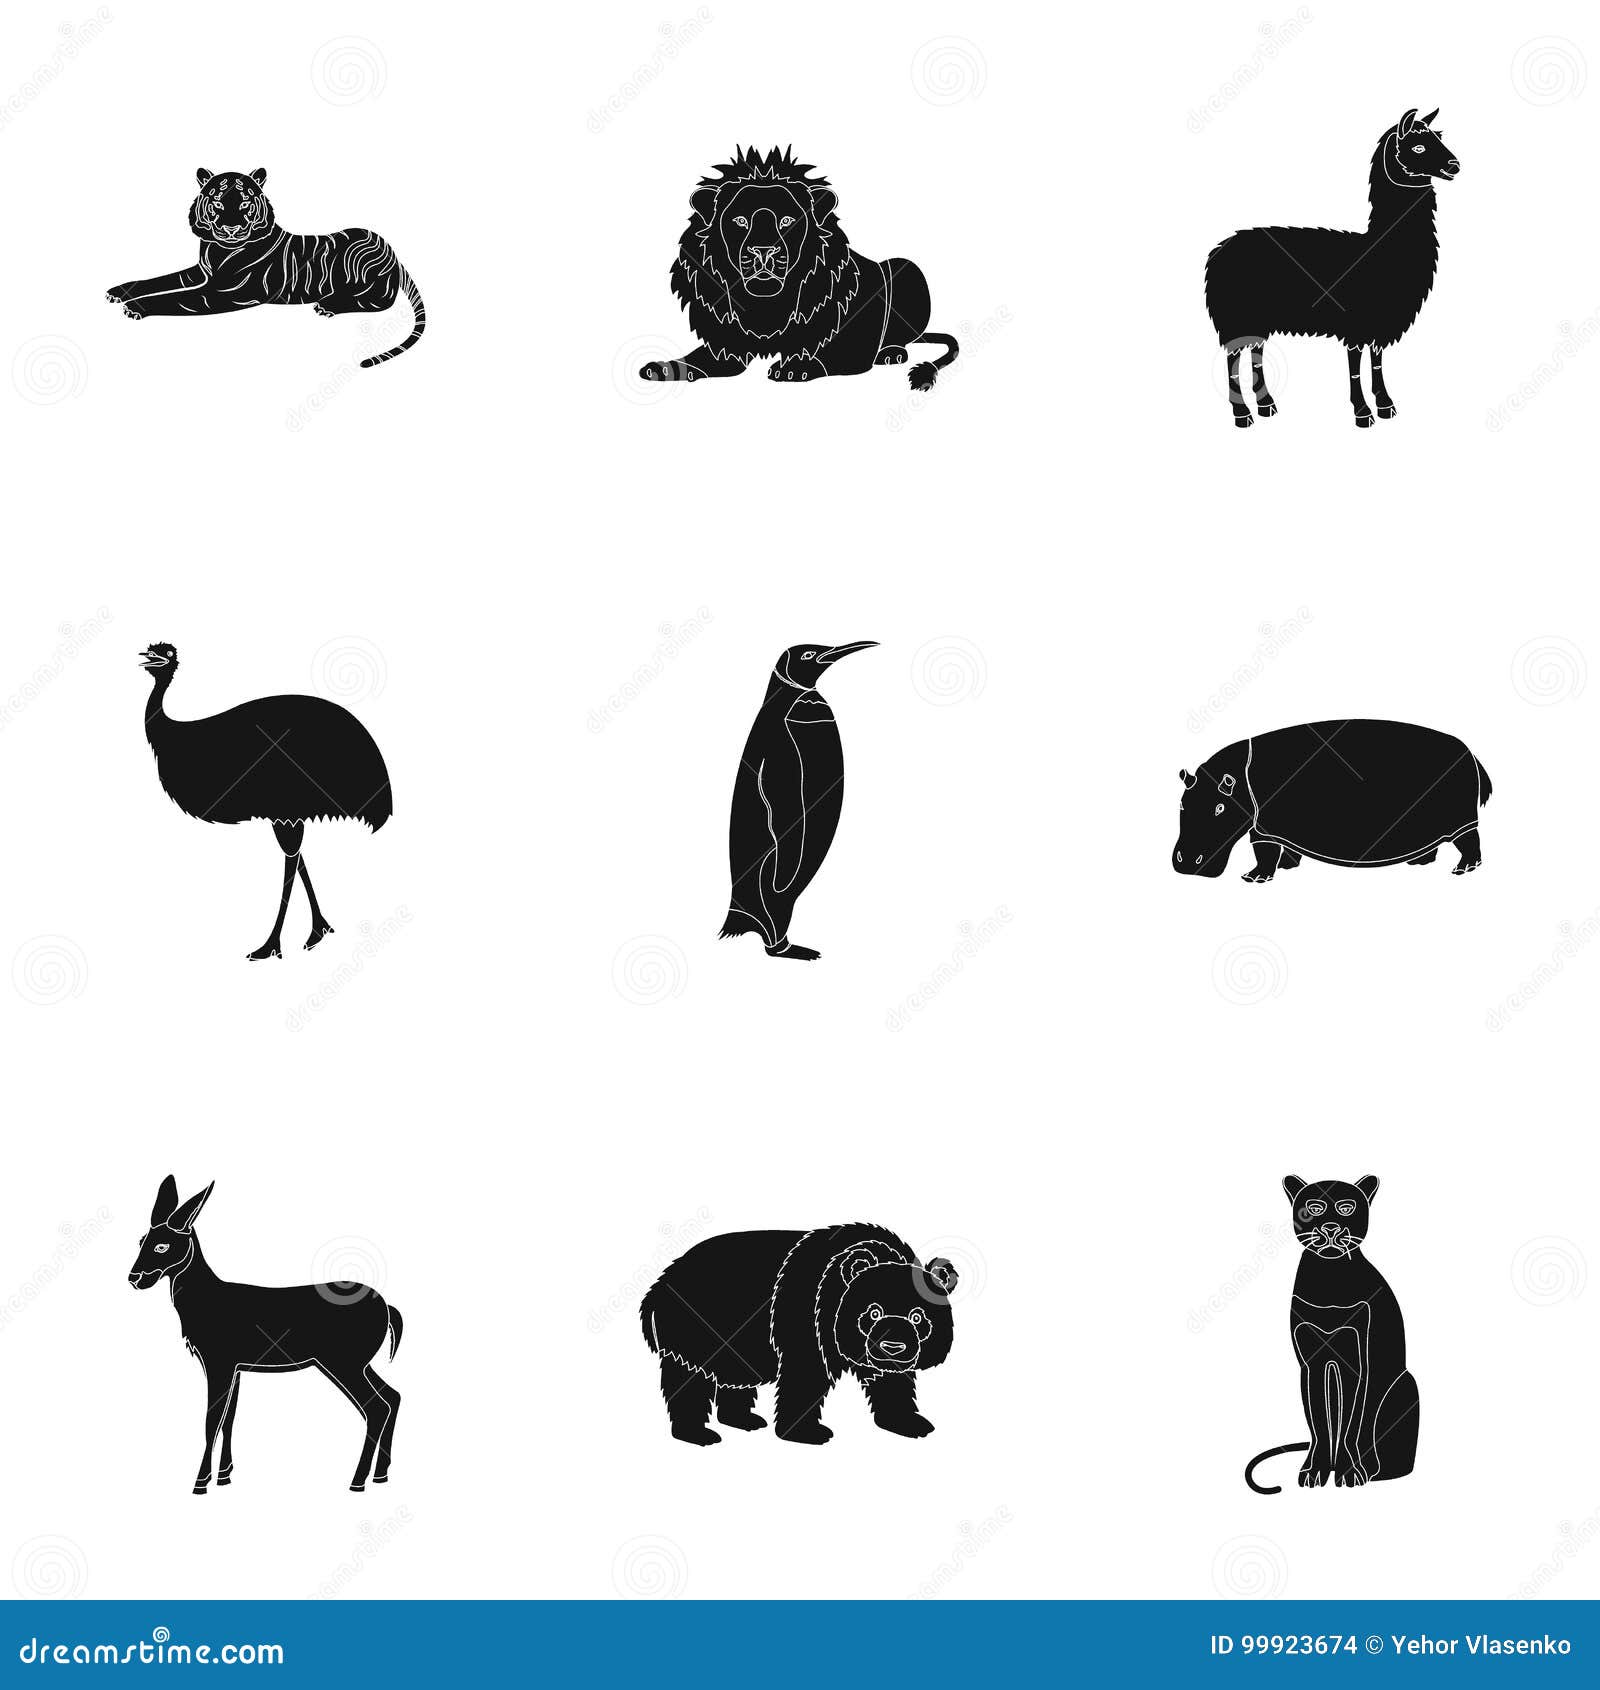 ostrich emu, crocodile, giraffe, tiger, penguin and other wild animals. artiodactyla, mammalian predators and animals